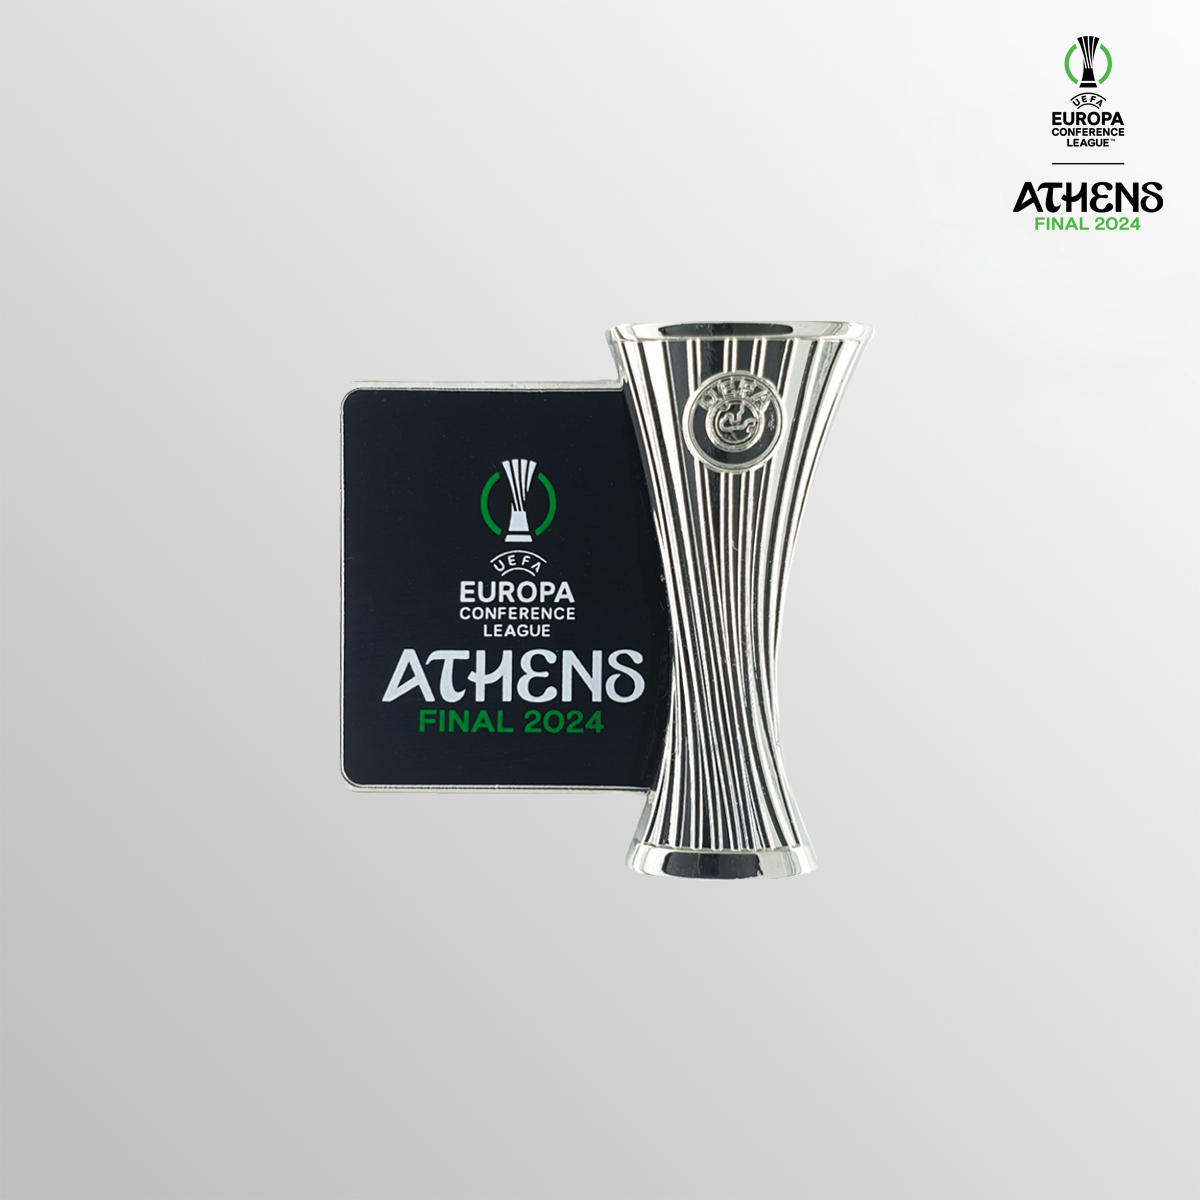 UEFA Europa Conference League Athens Final 2024 Pin Badge